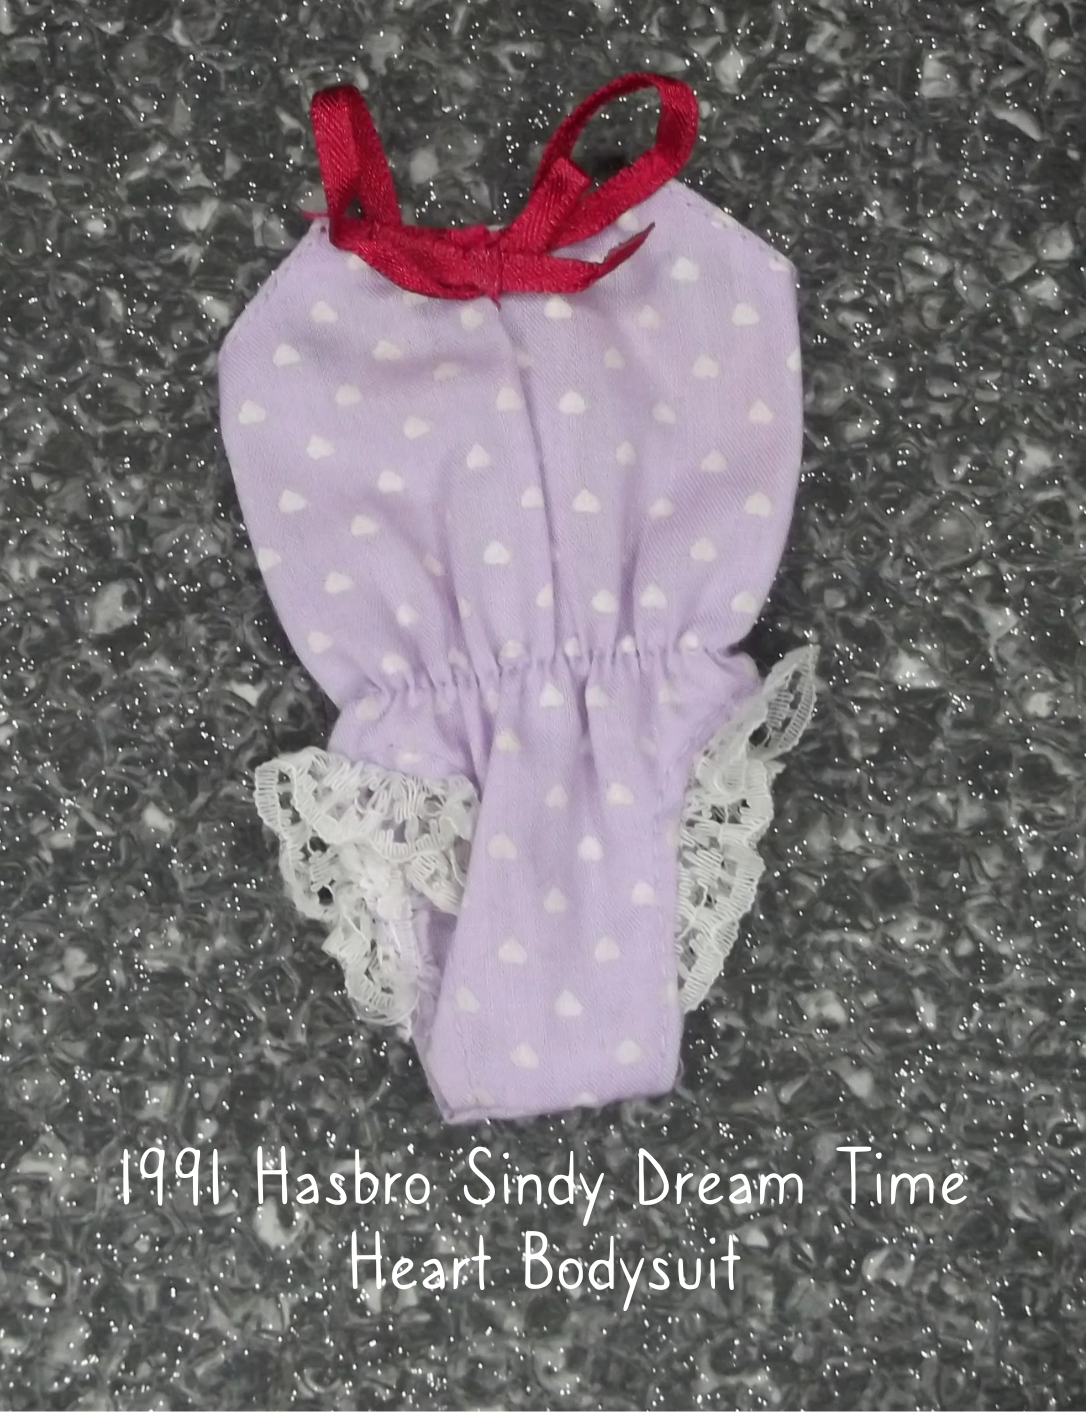 1991 Hasbro Sindy Dream Time Lingerie Collection Purple Heart Bodysuit